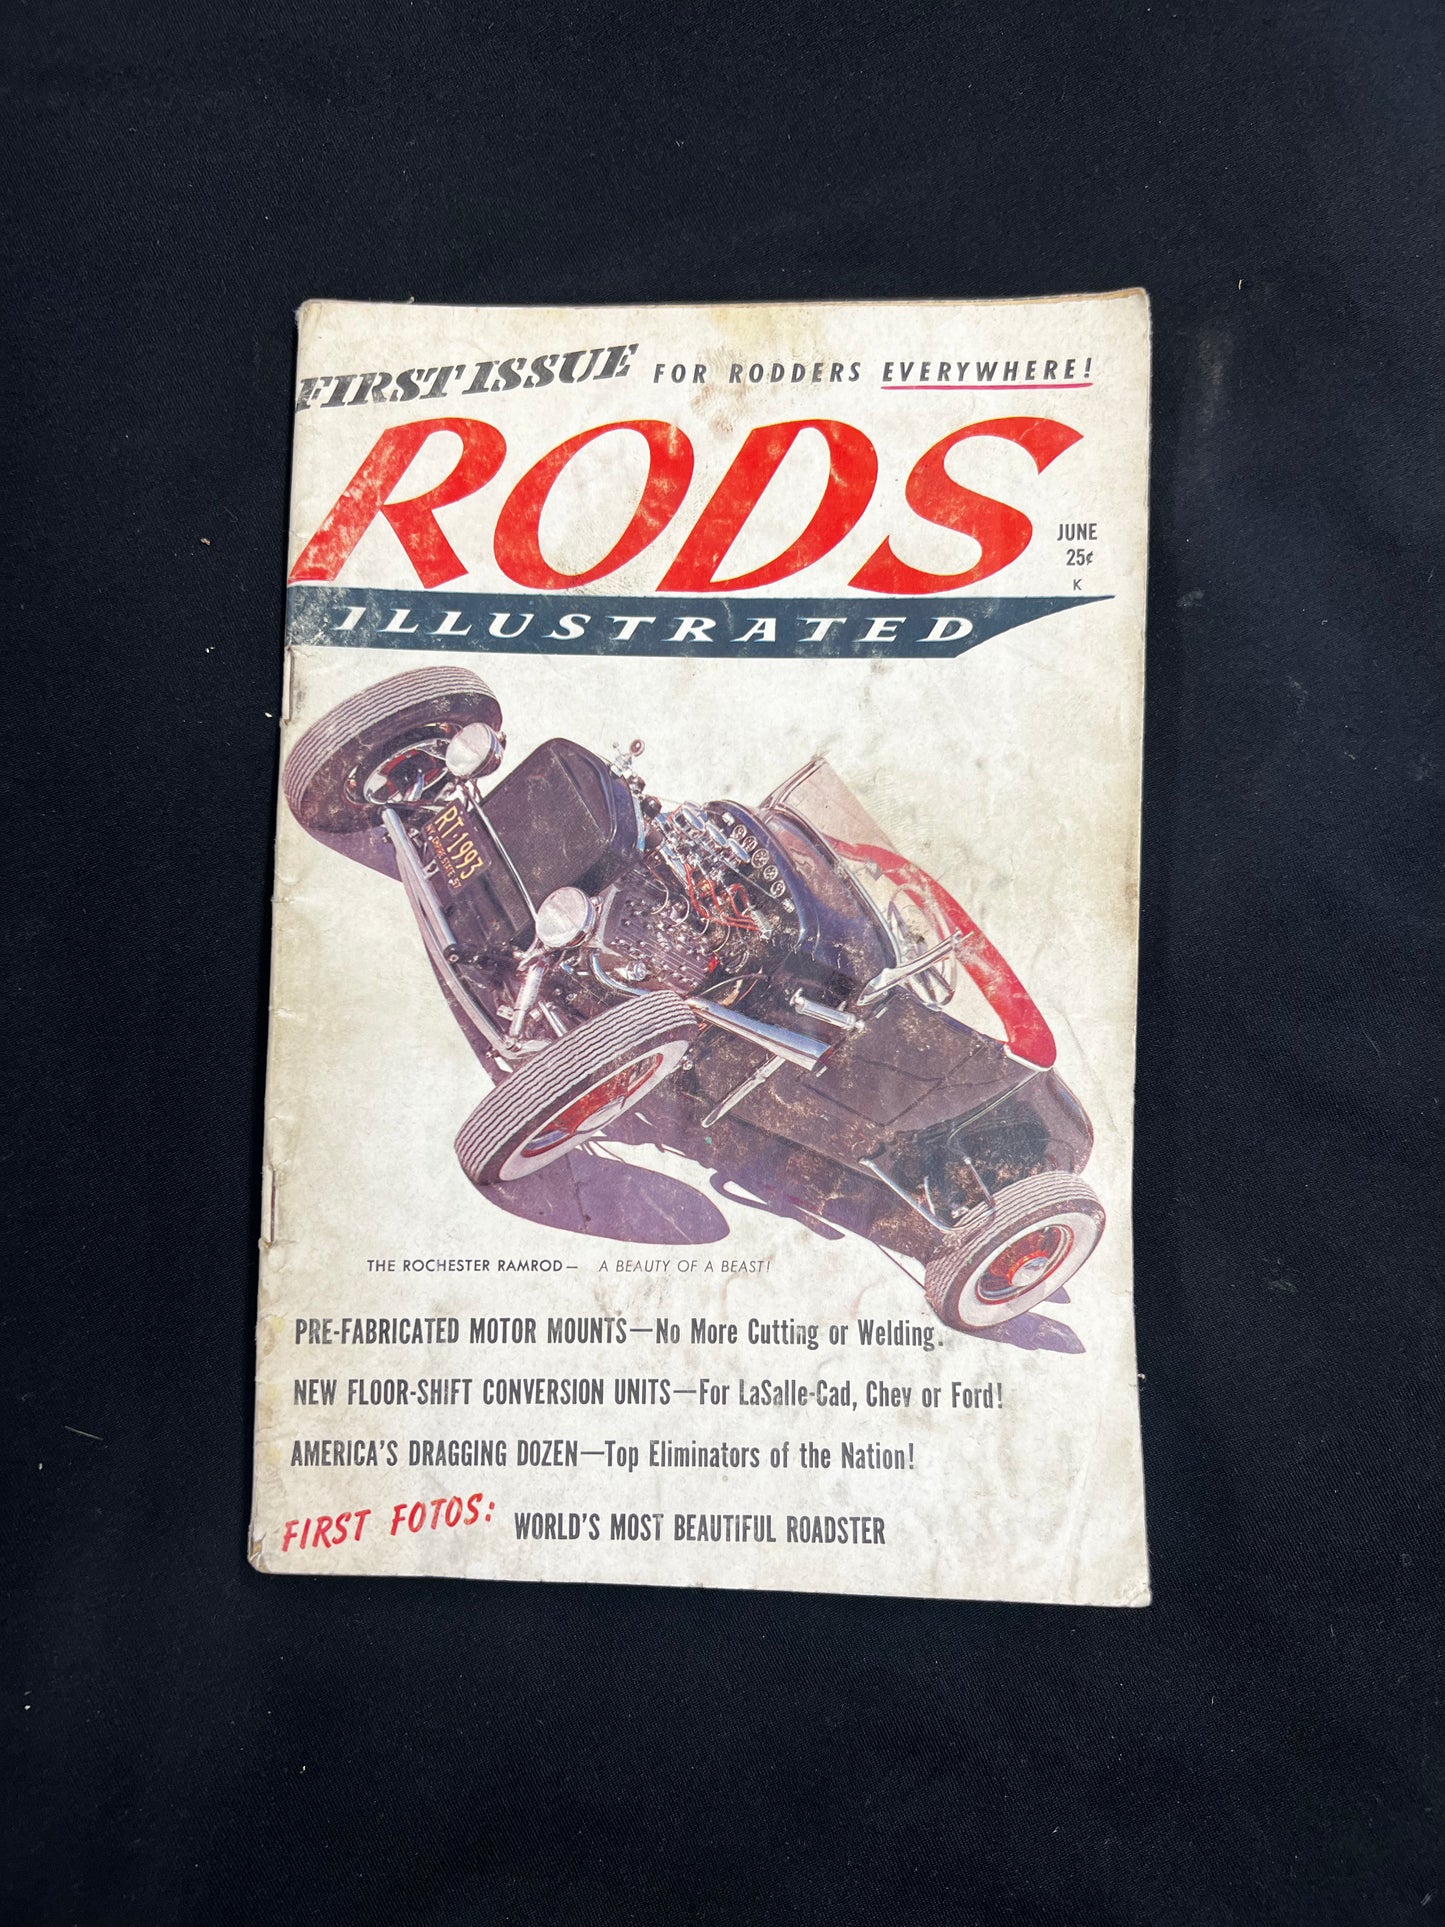 Rods Illustrated Magazine June 1958 Volume 1, Number 1